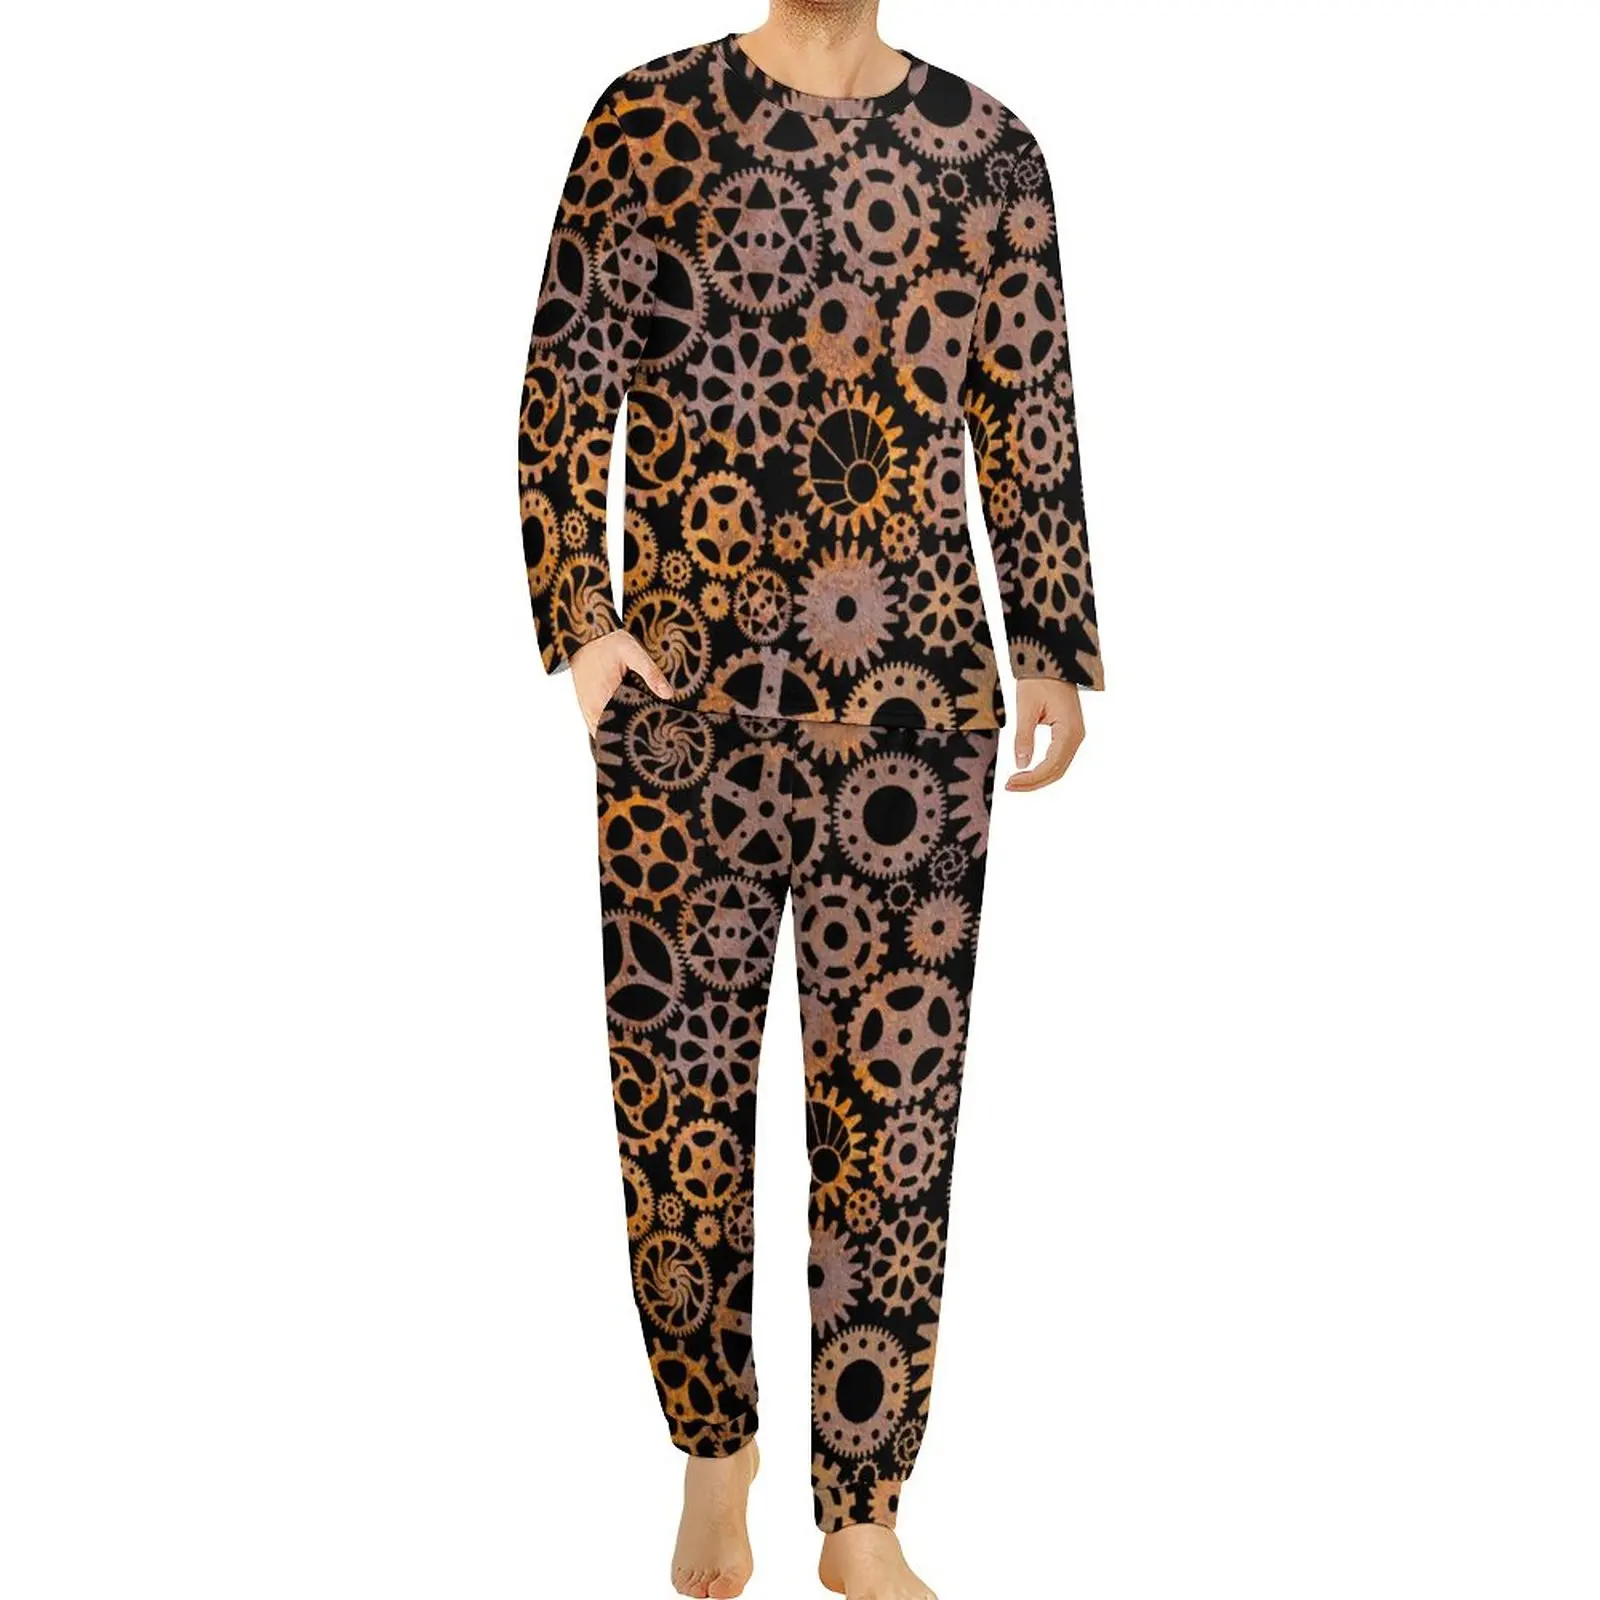 Steampunk Print Pajamas Rusty Gears Men Long Sleeves Soft Pajama Sets 2 Pieces Night Daily Custom Sleepwear Gift